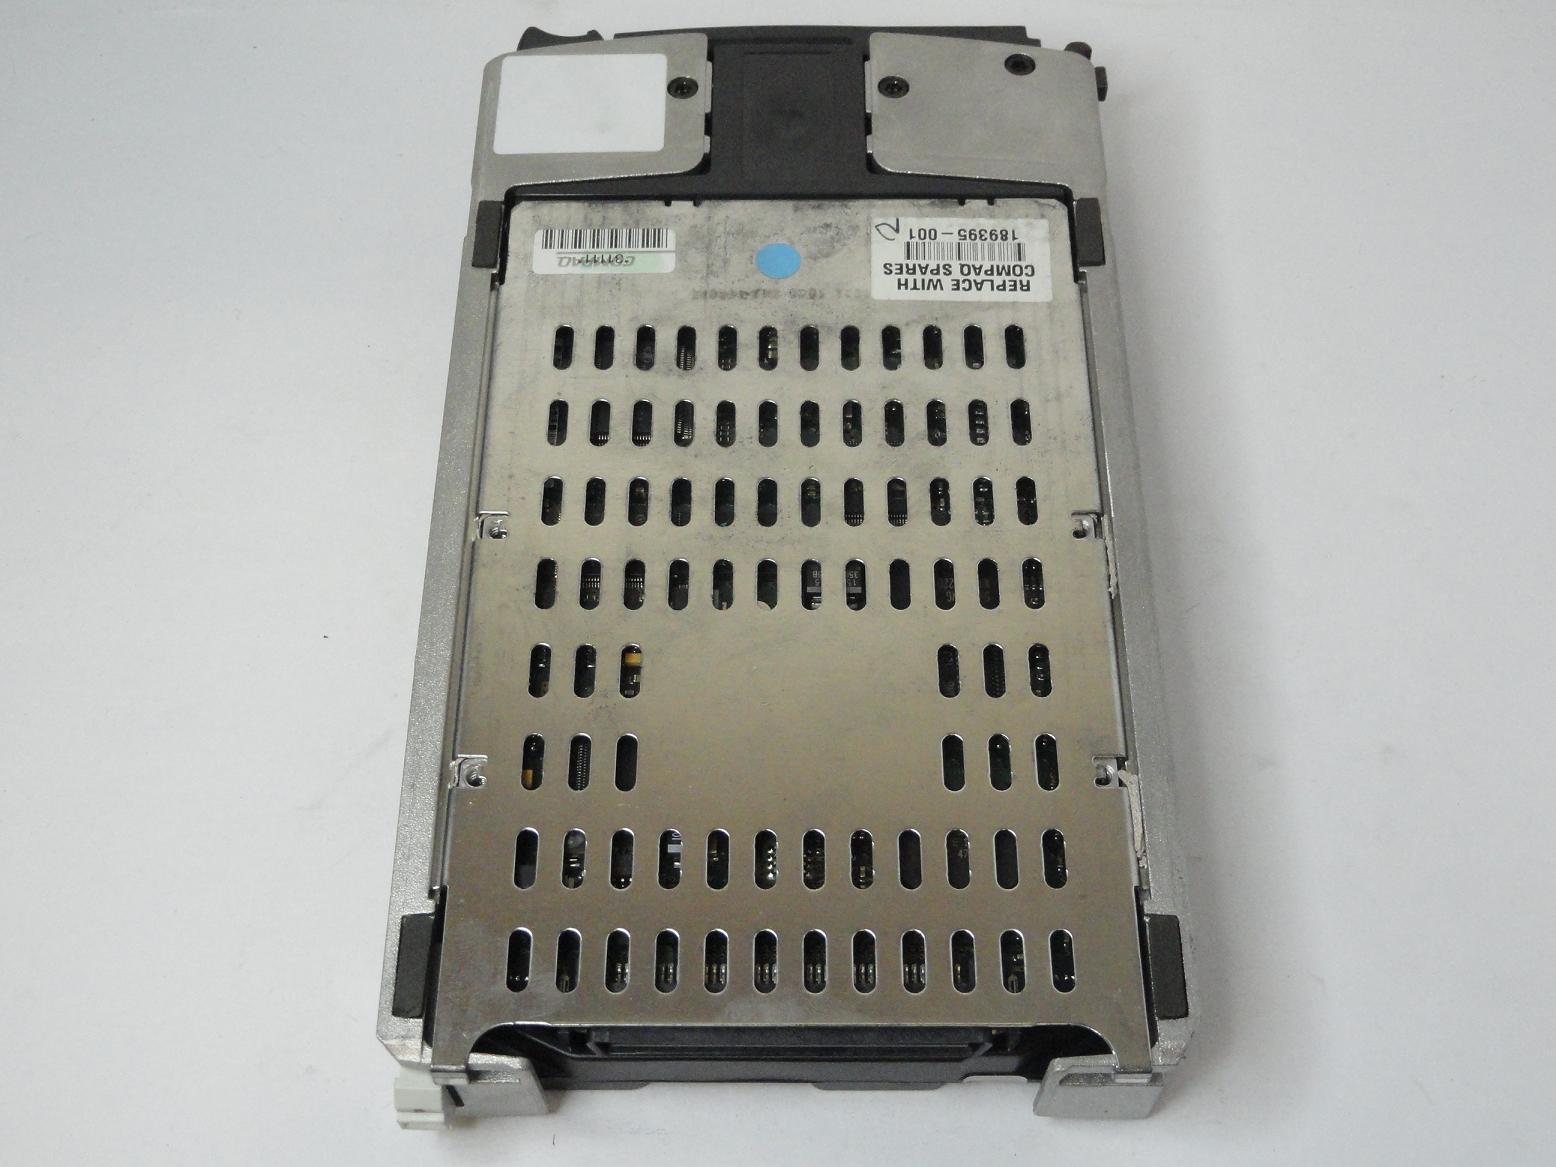 PR25713_9P2006-022_Seagate Compaq 18.2GB SCSI 80 Pin Recertified HDD - Image3